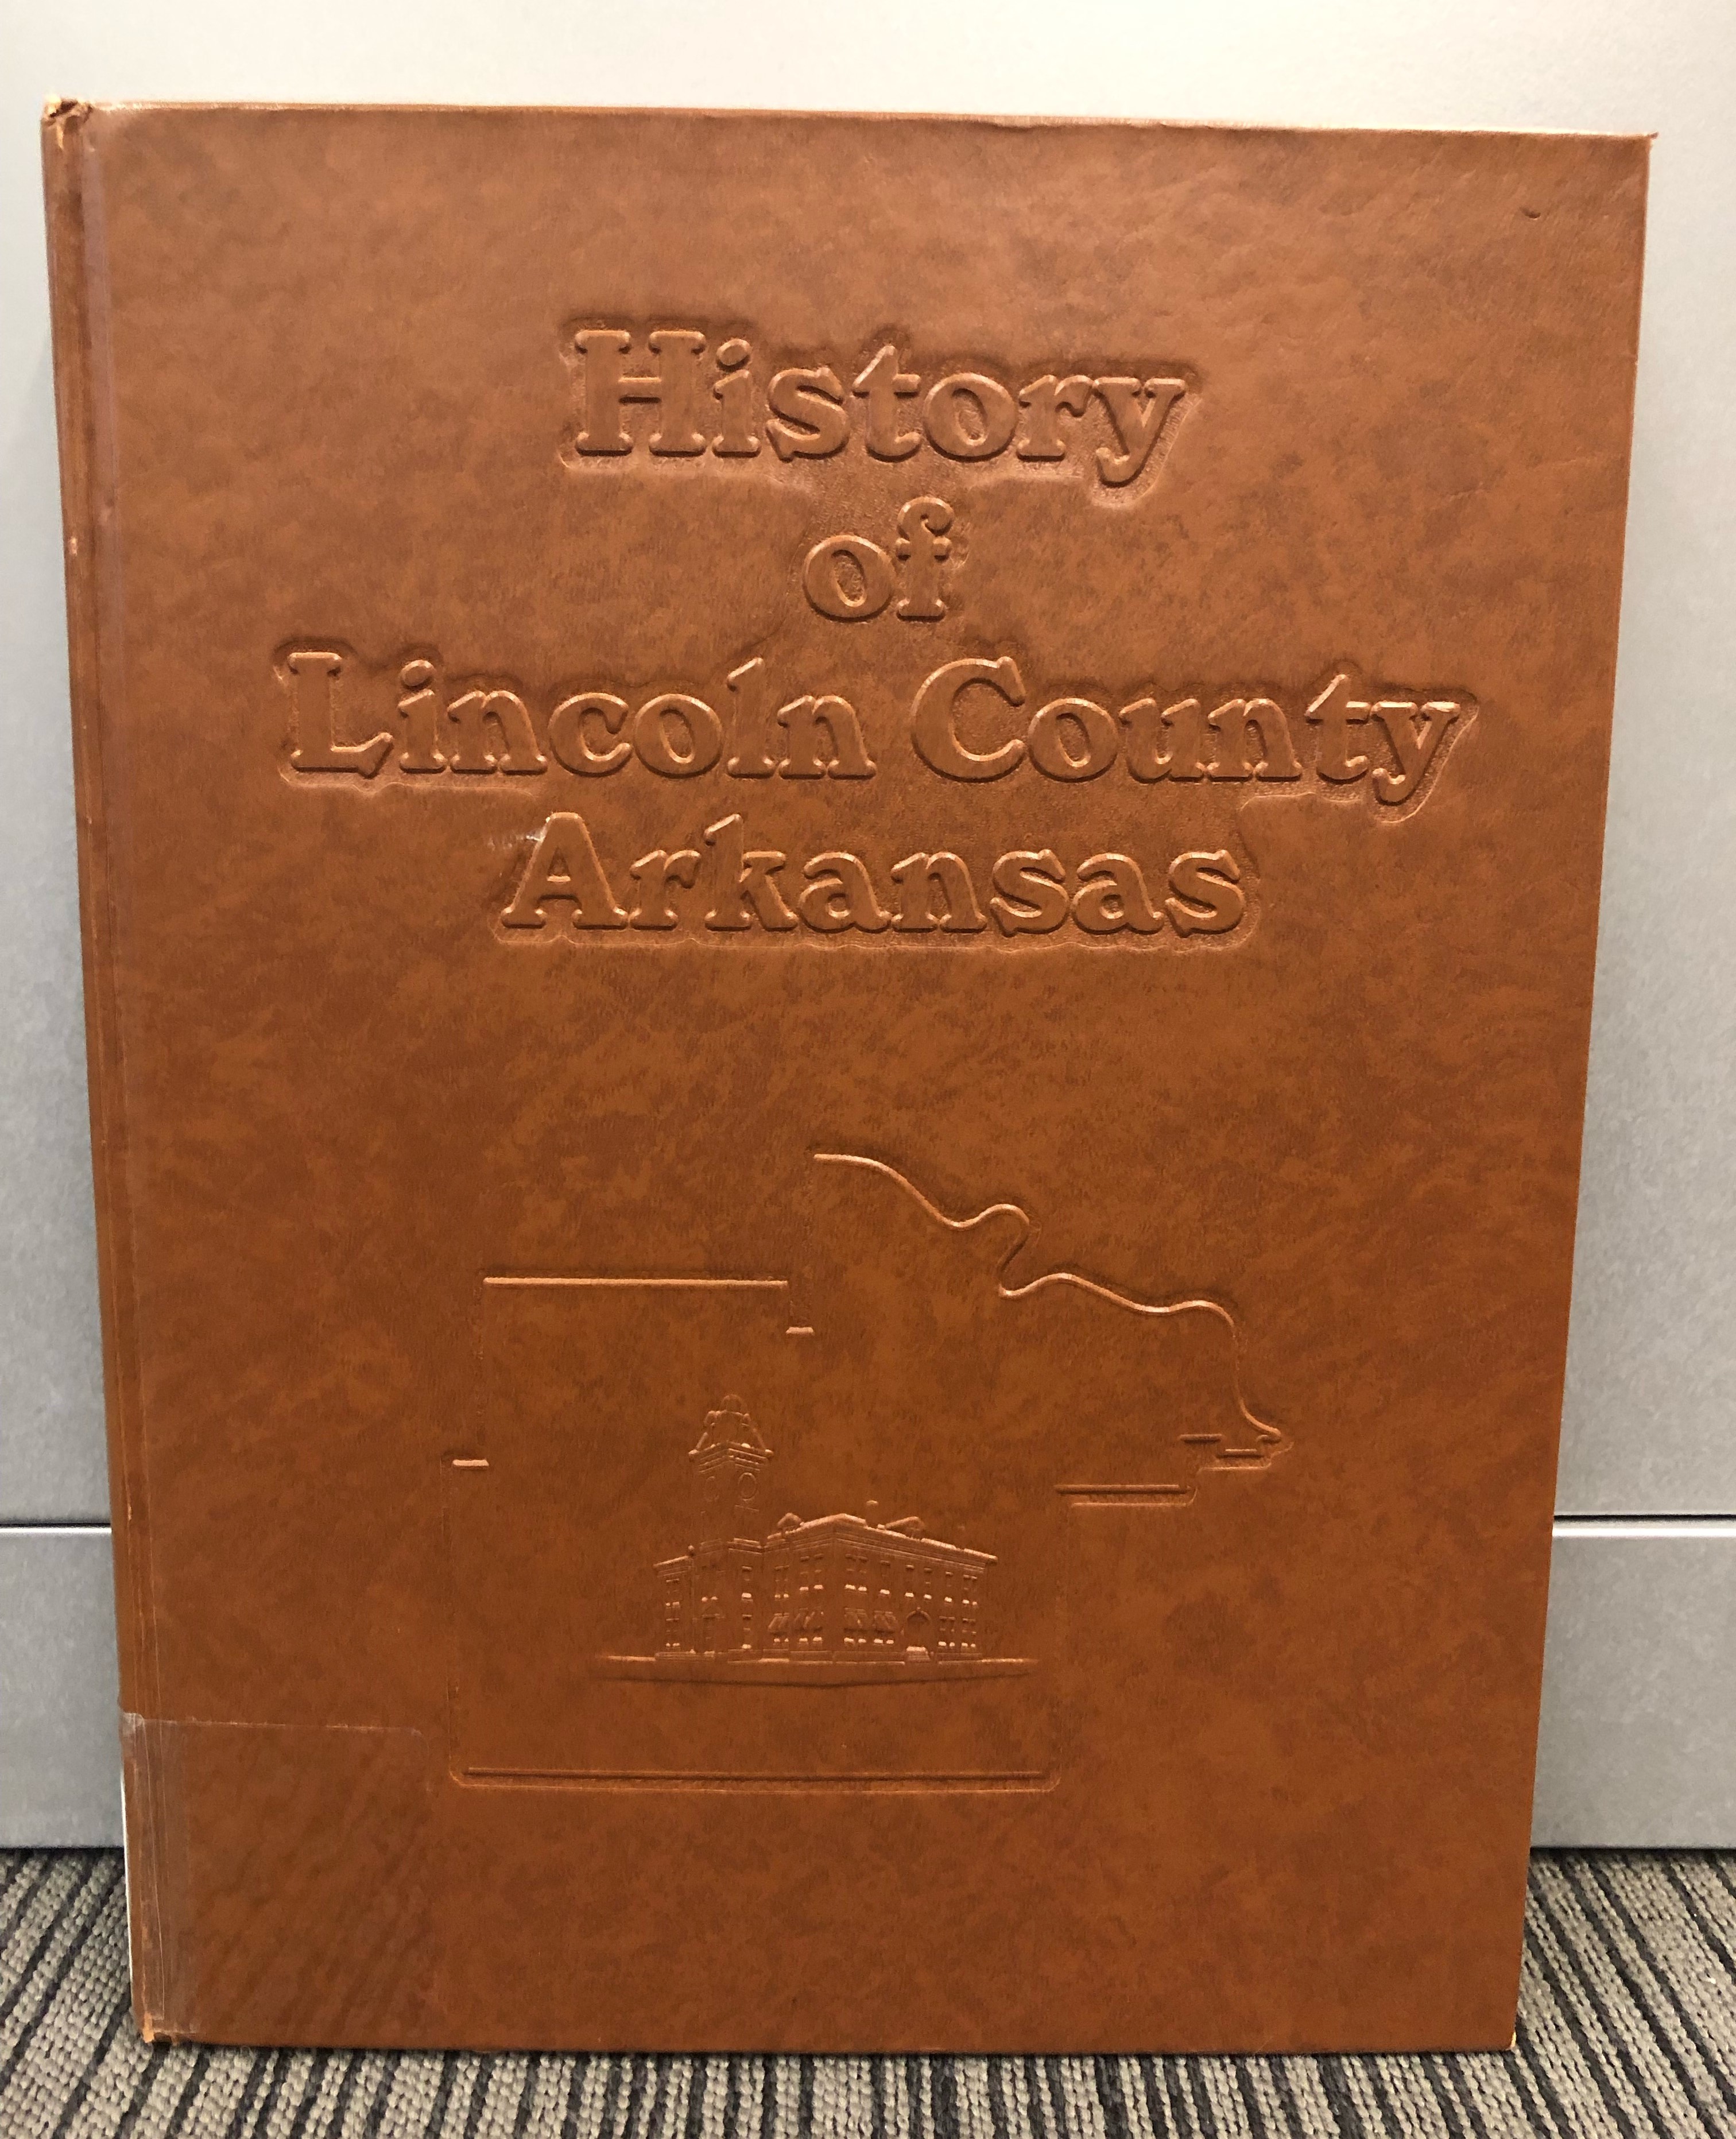 History of Lincoln County, Arkansas, 1871-1983